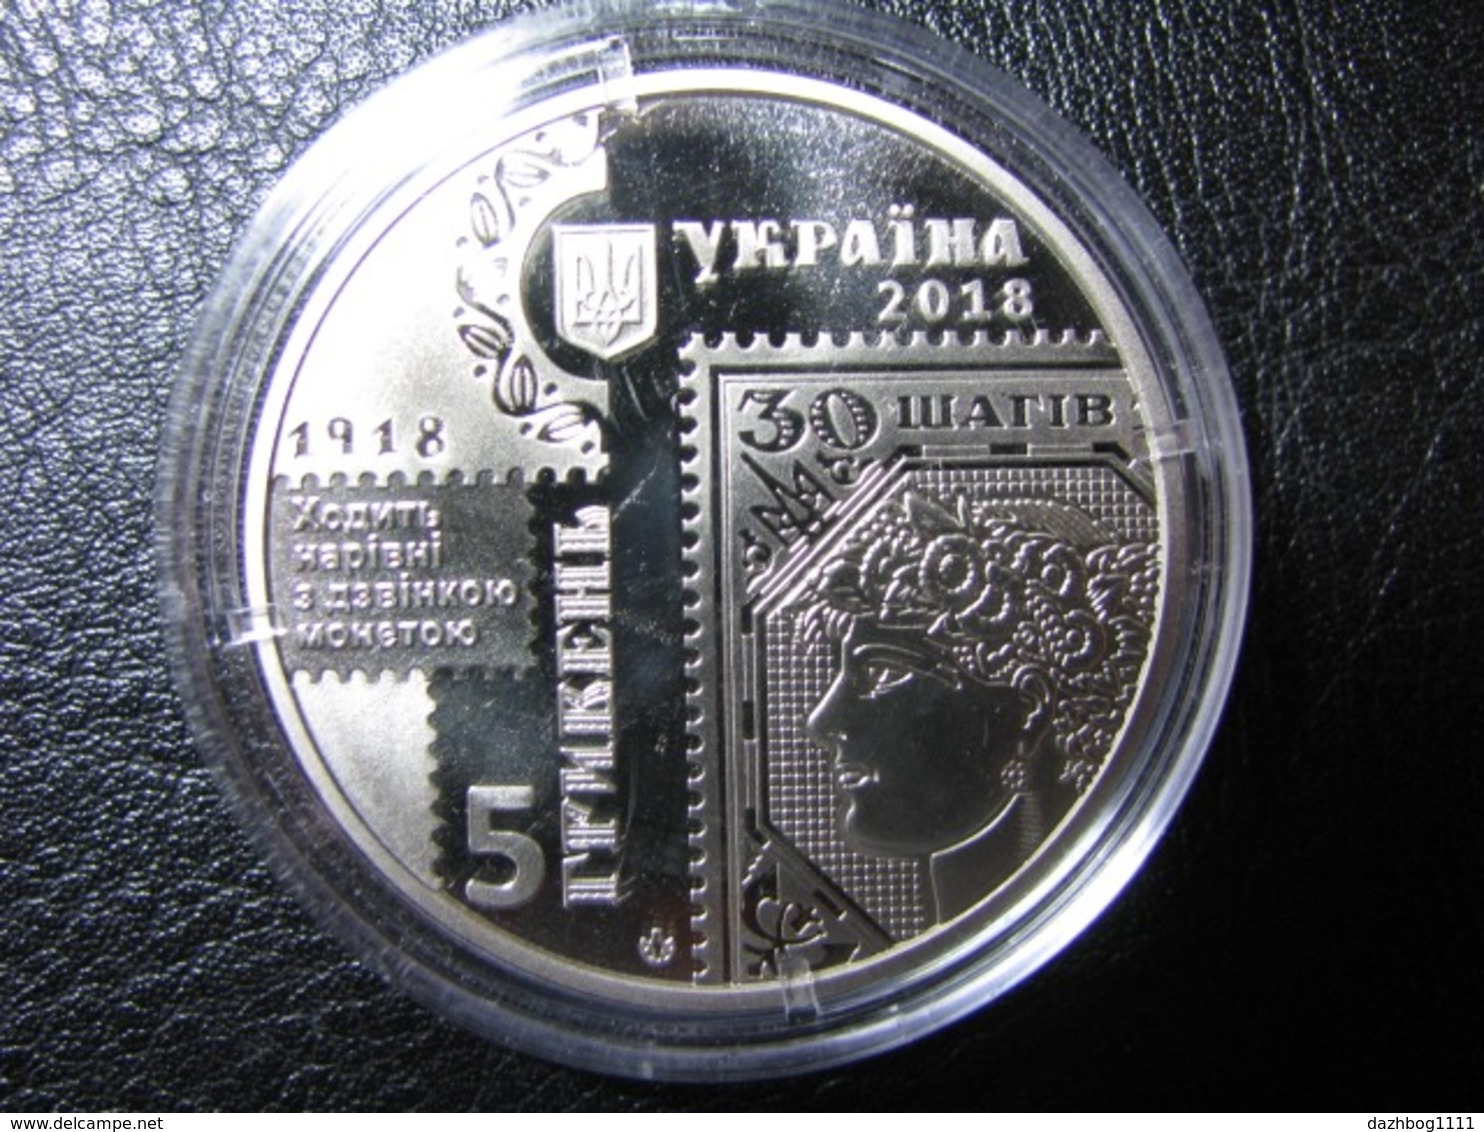 Ukraine Coin 100th Anniversary Of The First Postage Stamps Of Ukraine 2018 5 UAH - Ukraine